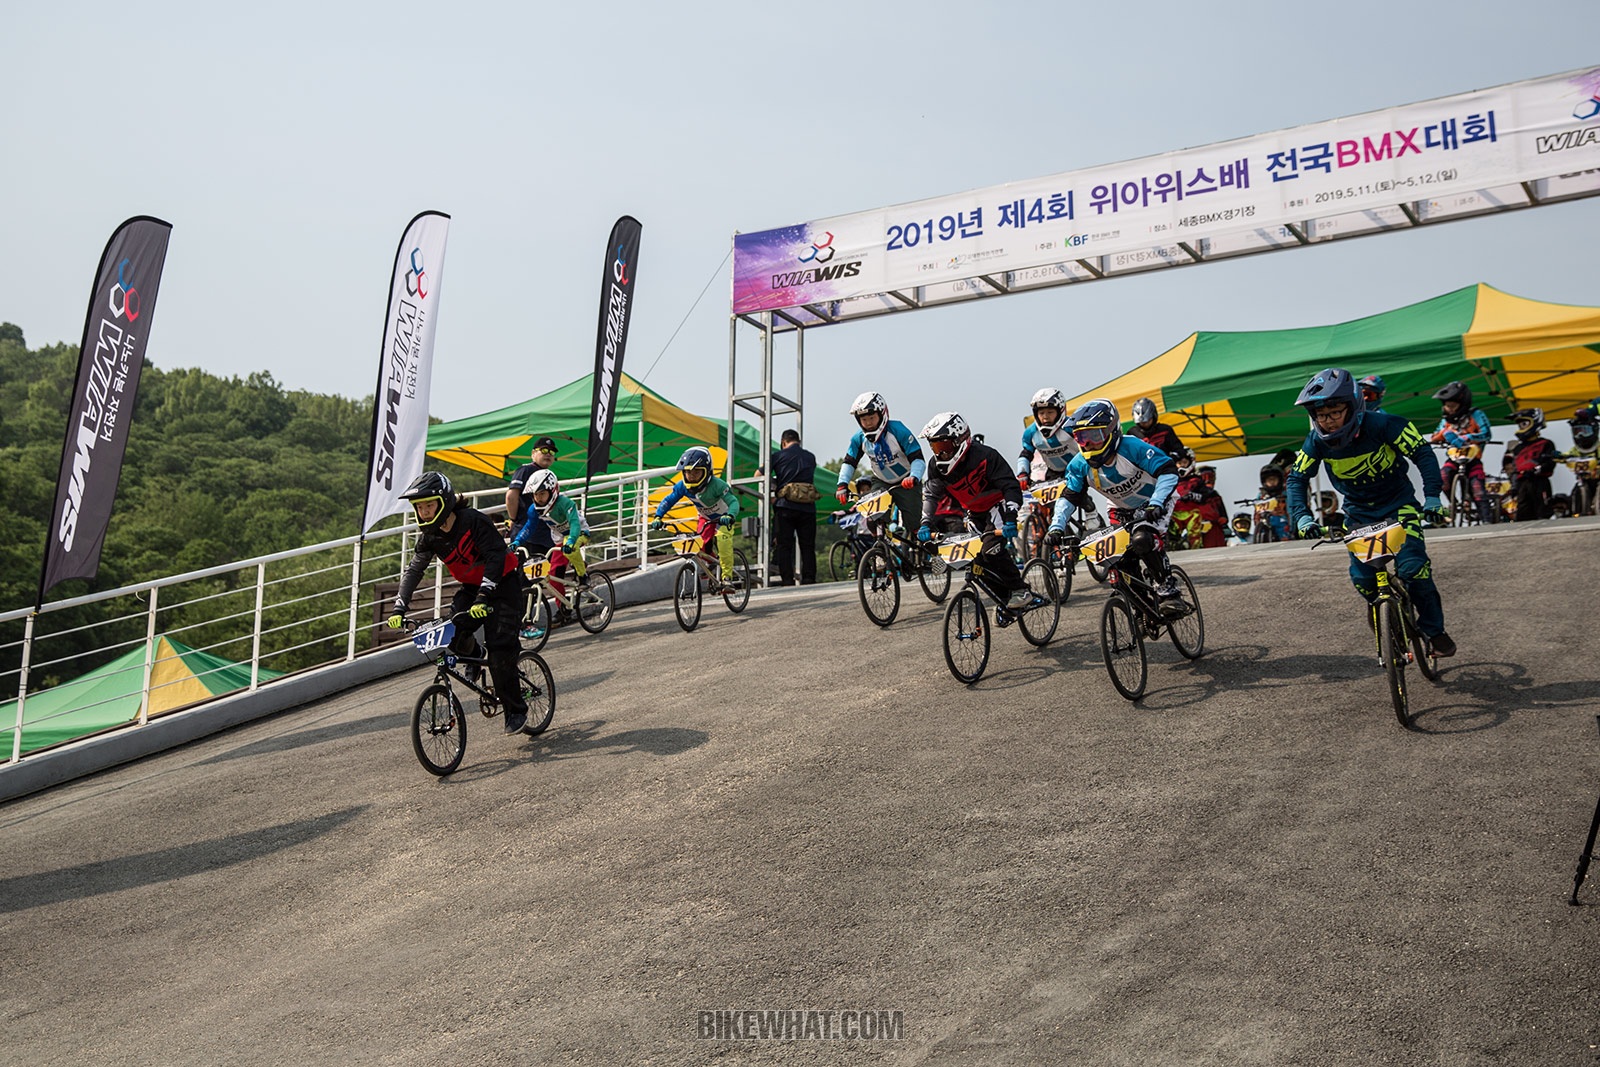 News_Wiawis_BMX_race_2019_1.jpg